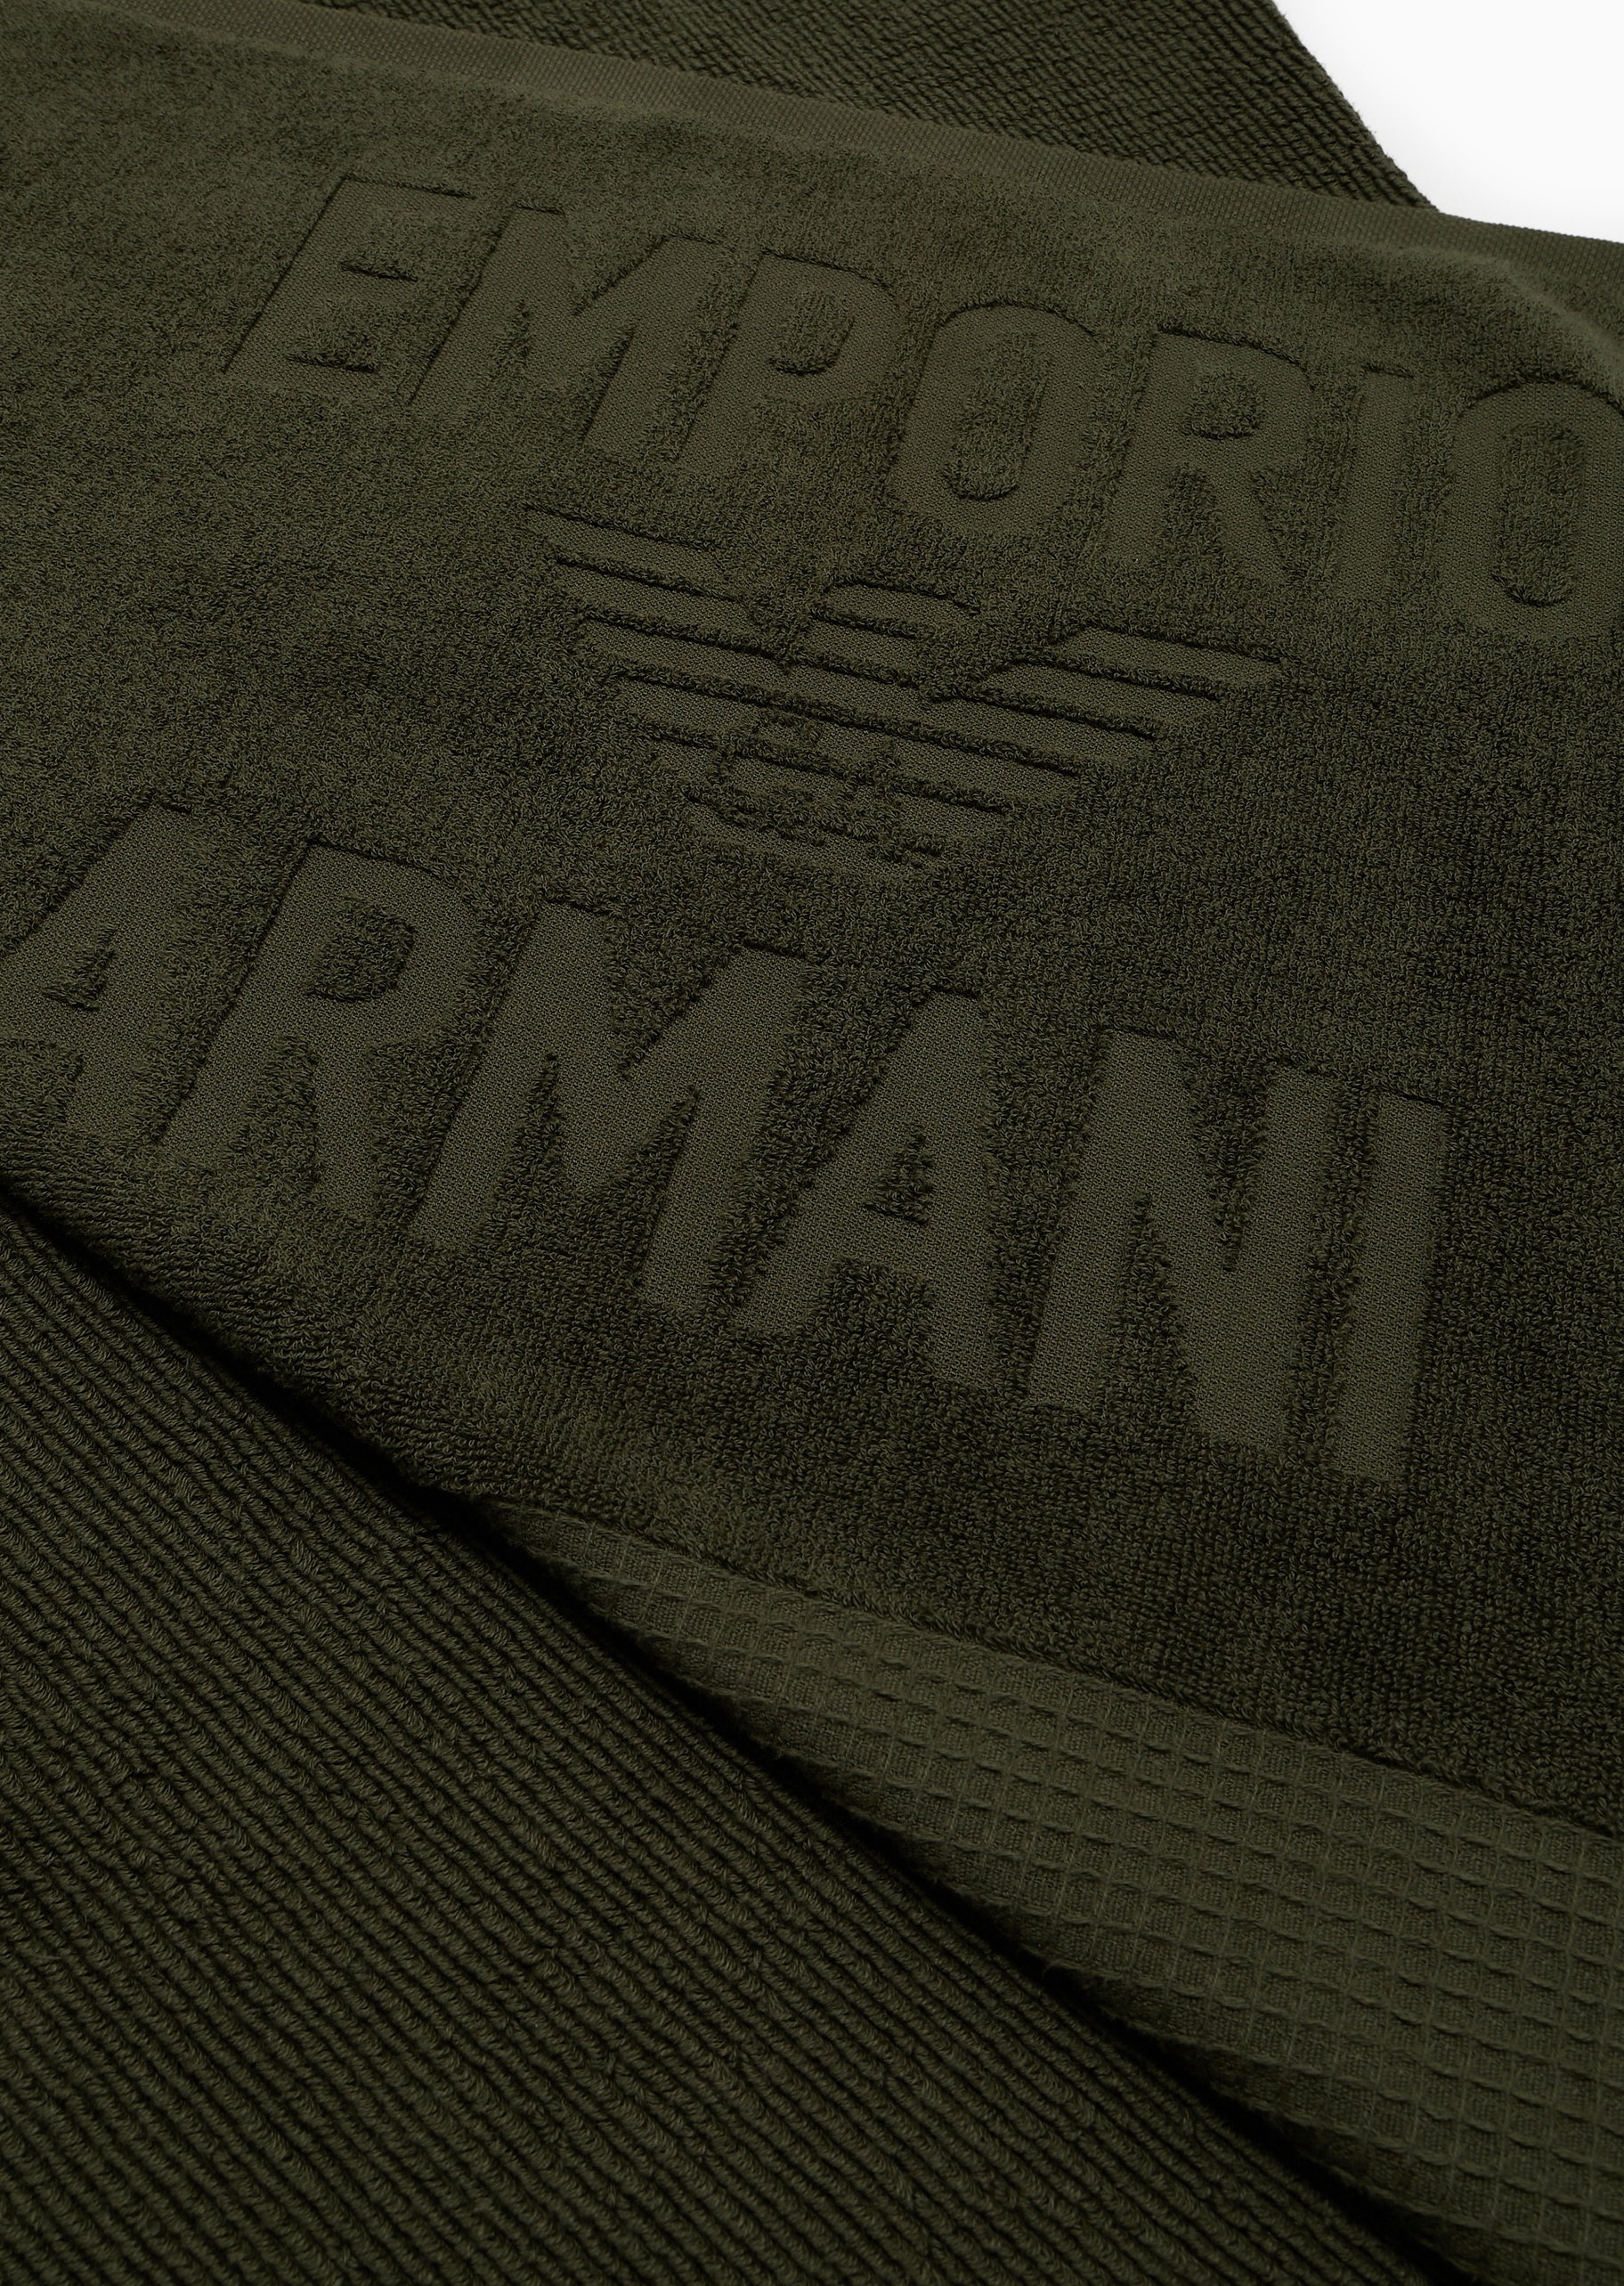 Emporio Armani 男女同款全棉长方形华夫格LOGO沙滩毛巾